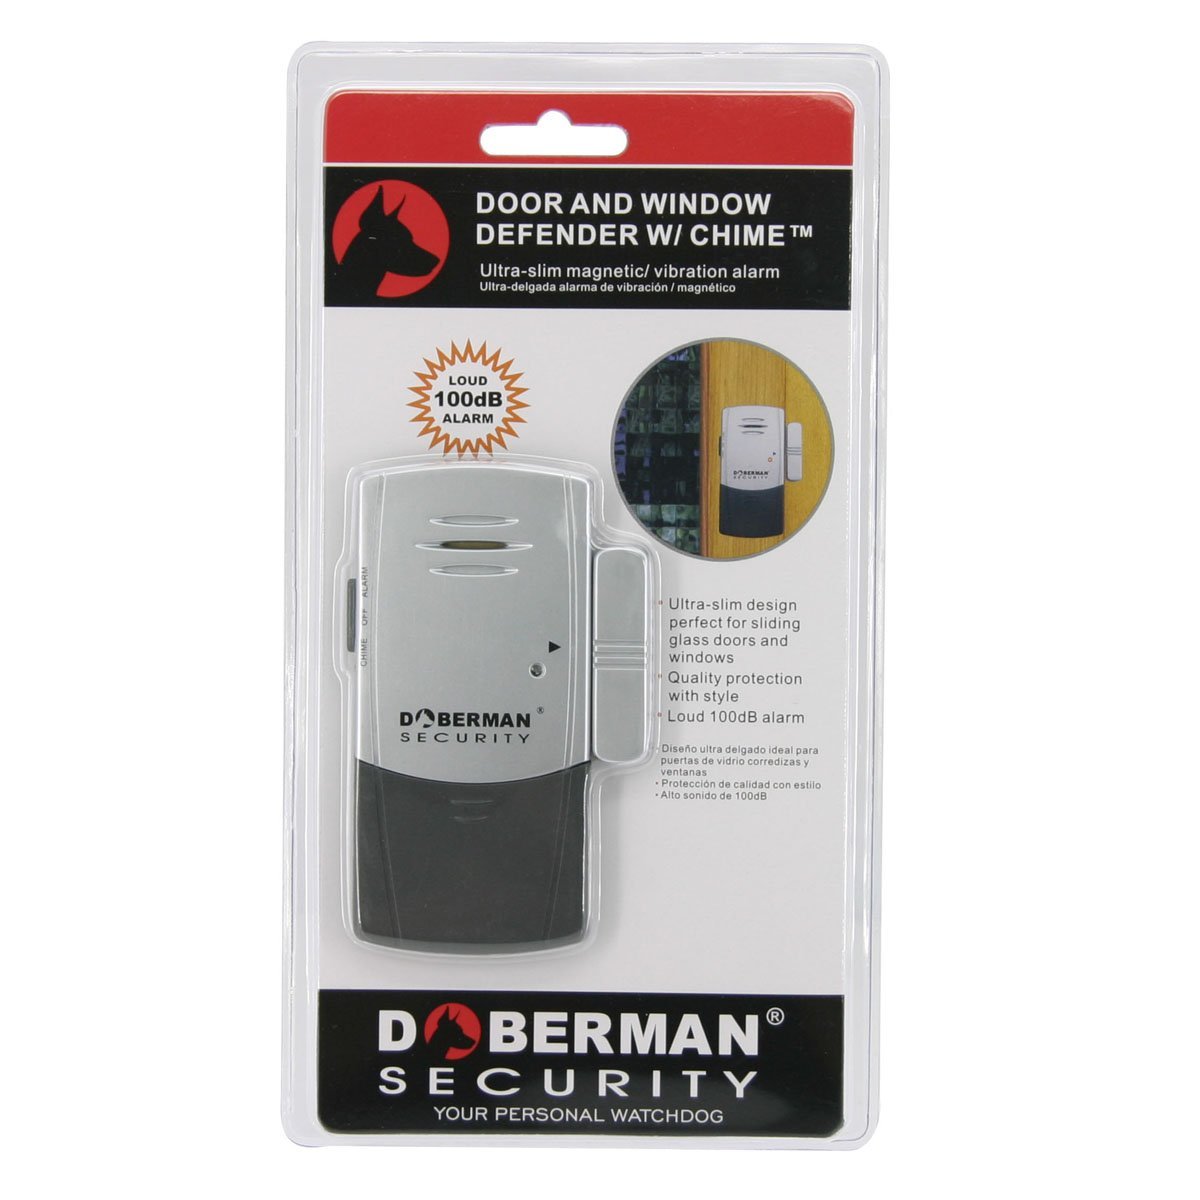 DOBERMAN-SECURITY-SE-0101-100dB-Wireless-Magnet-amp-Vibration-Dual-Triggered-Sensor-Door-Window-Alar-1259016